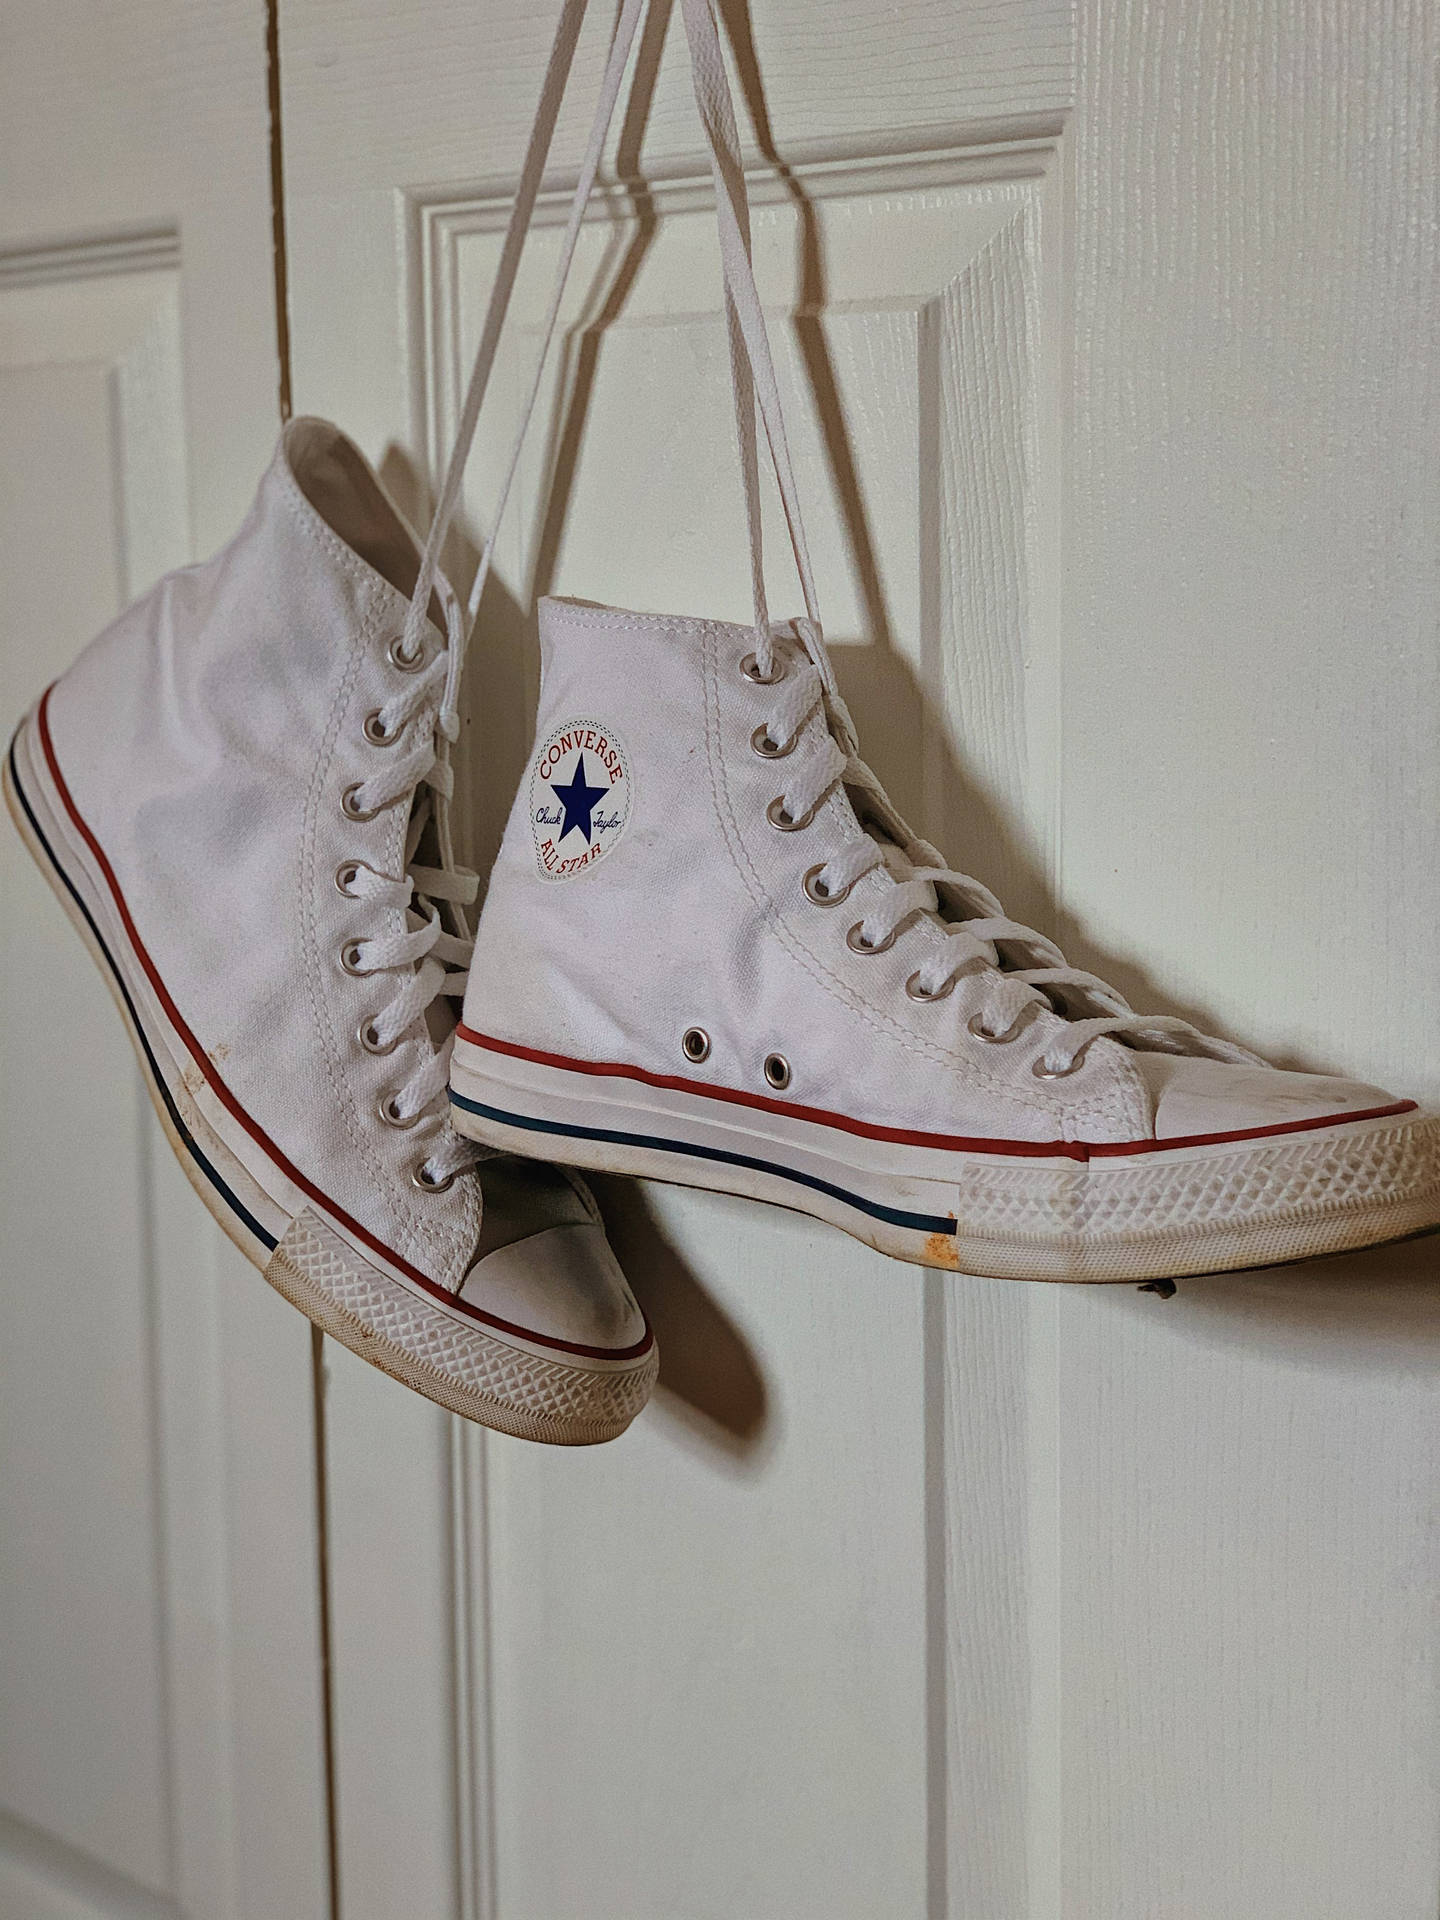 Hanging White Converse